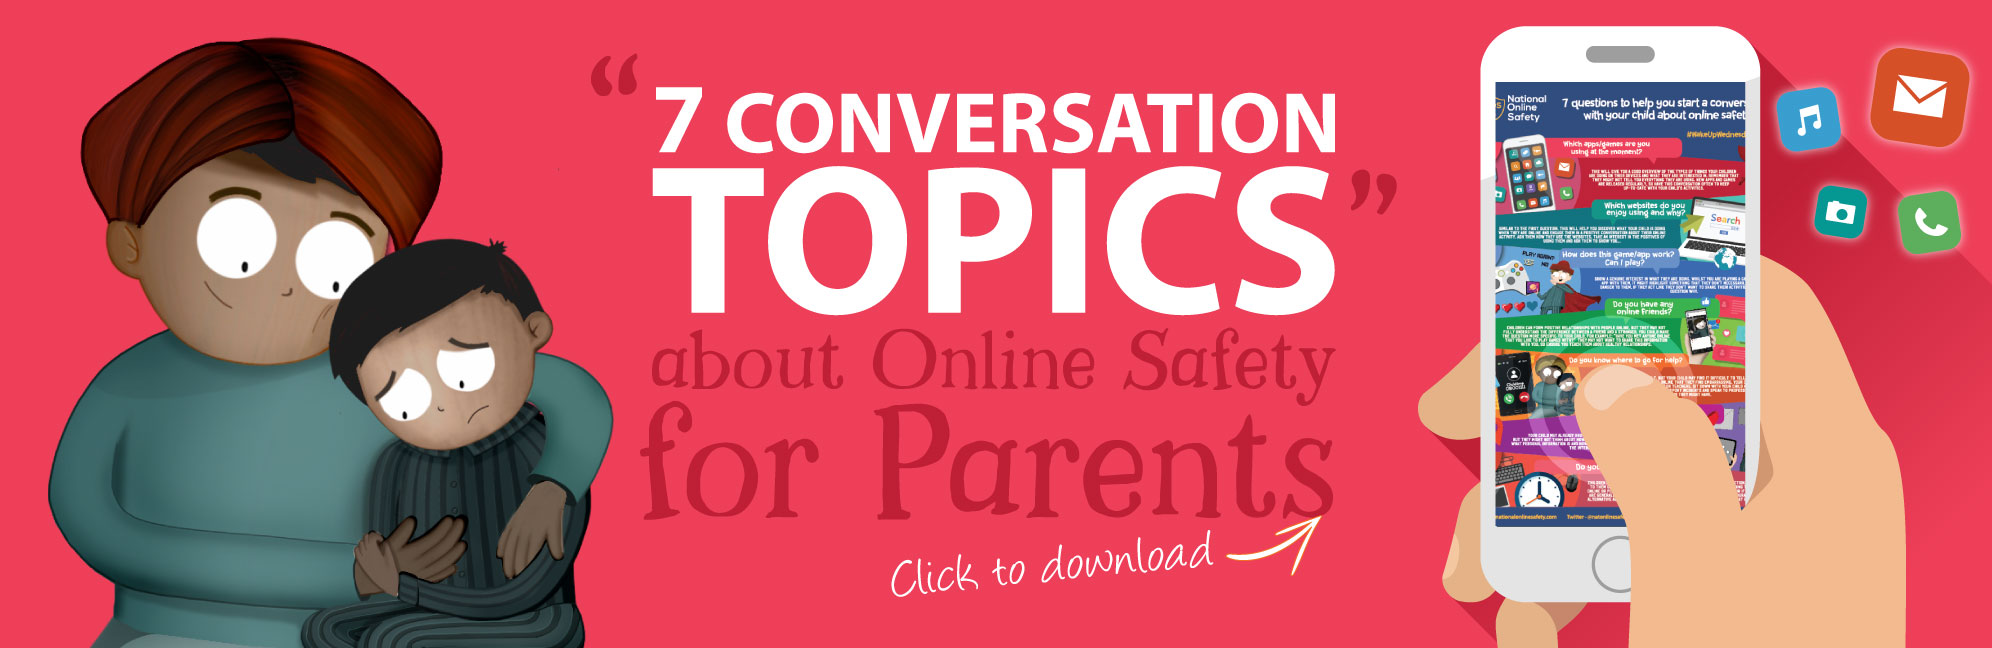 7-Conversation-Topics-Online-Safety-Parents-Guide-Web-Image-121118-V1